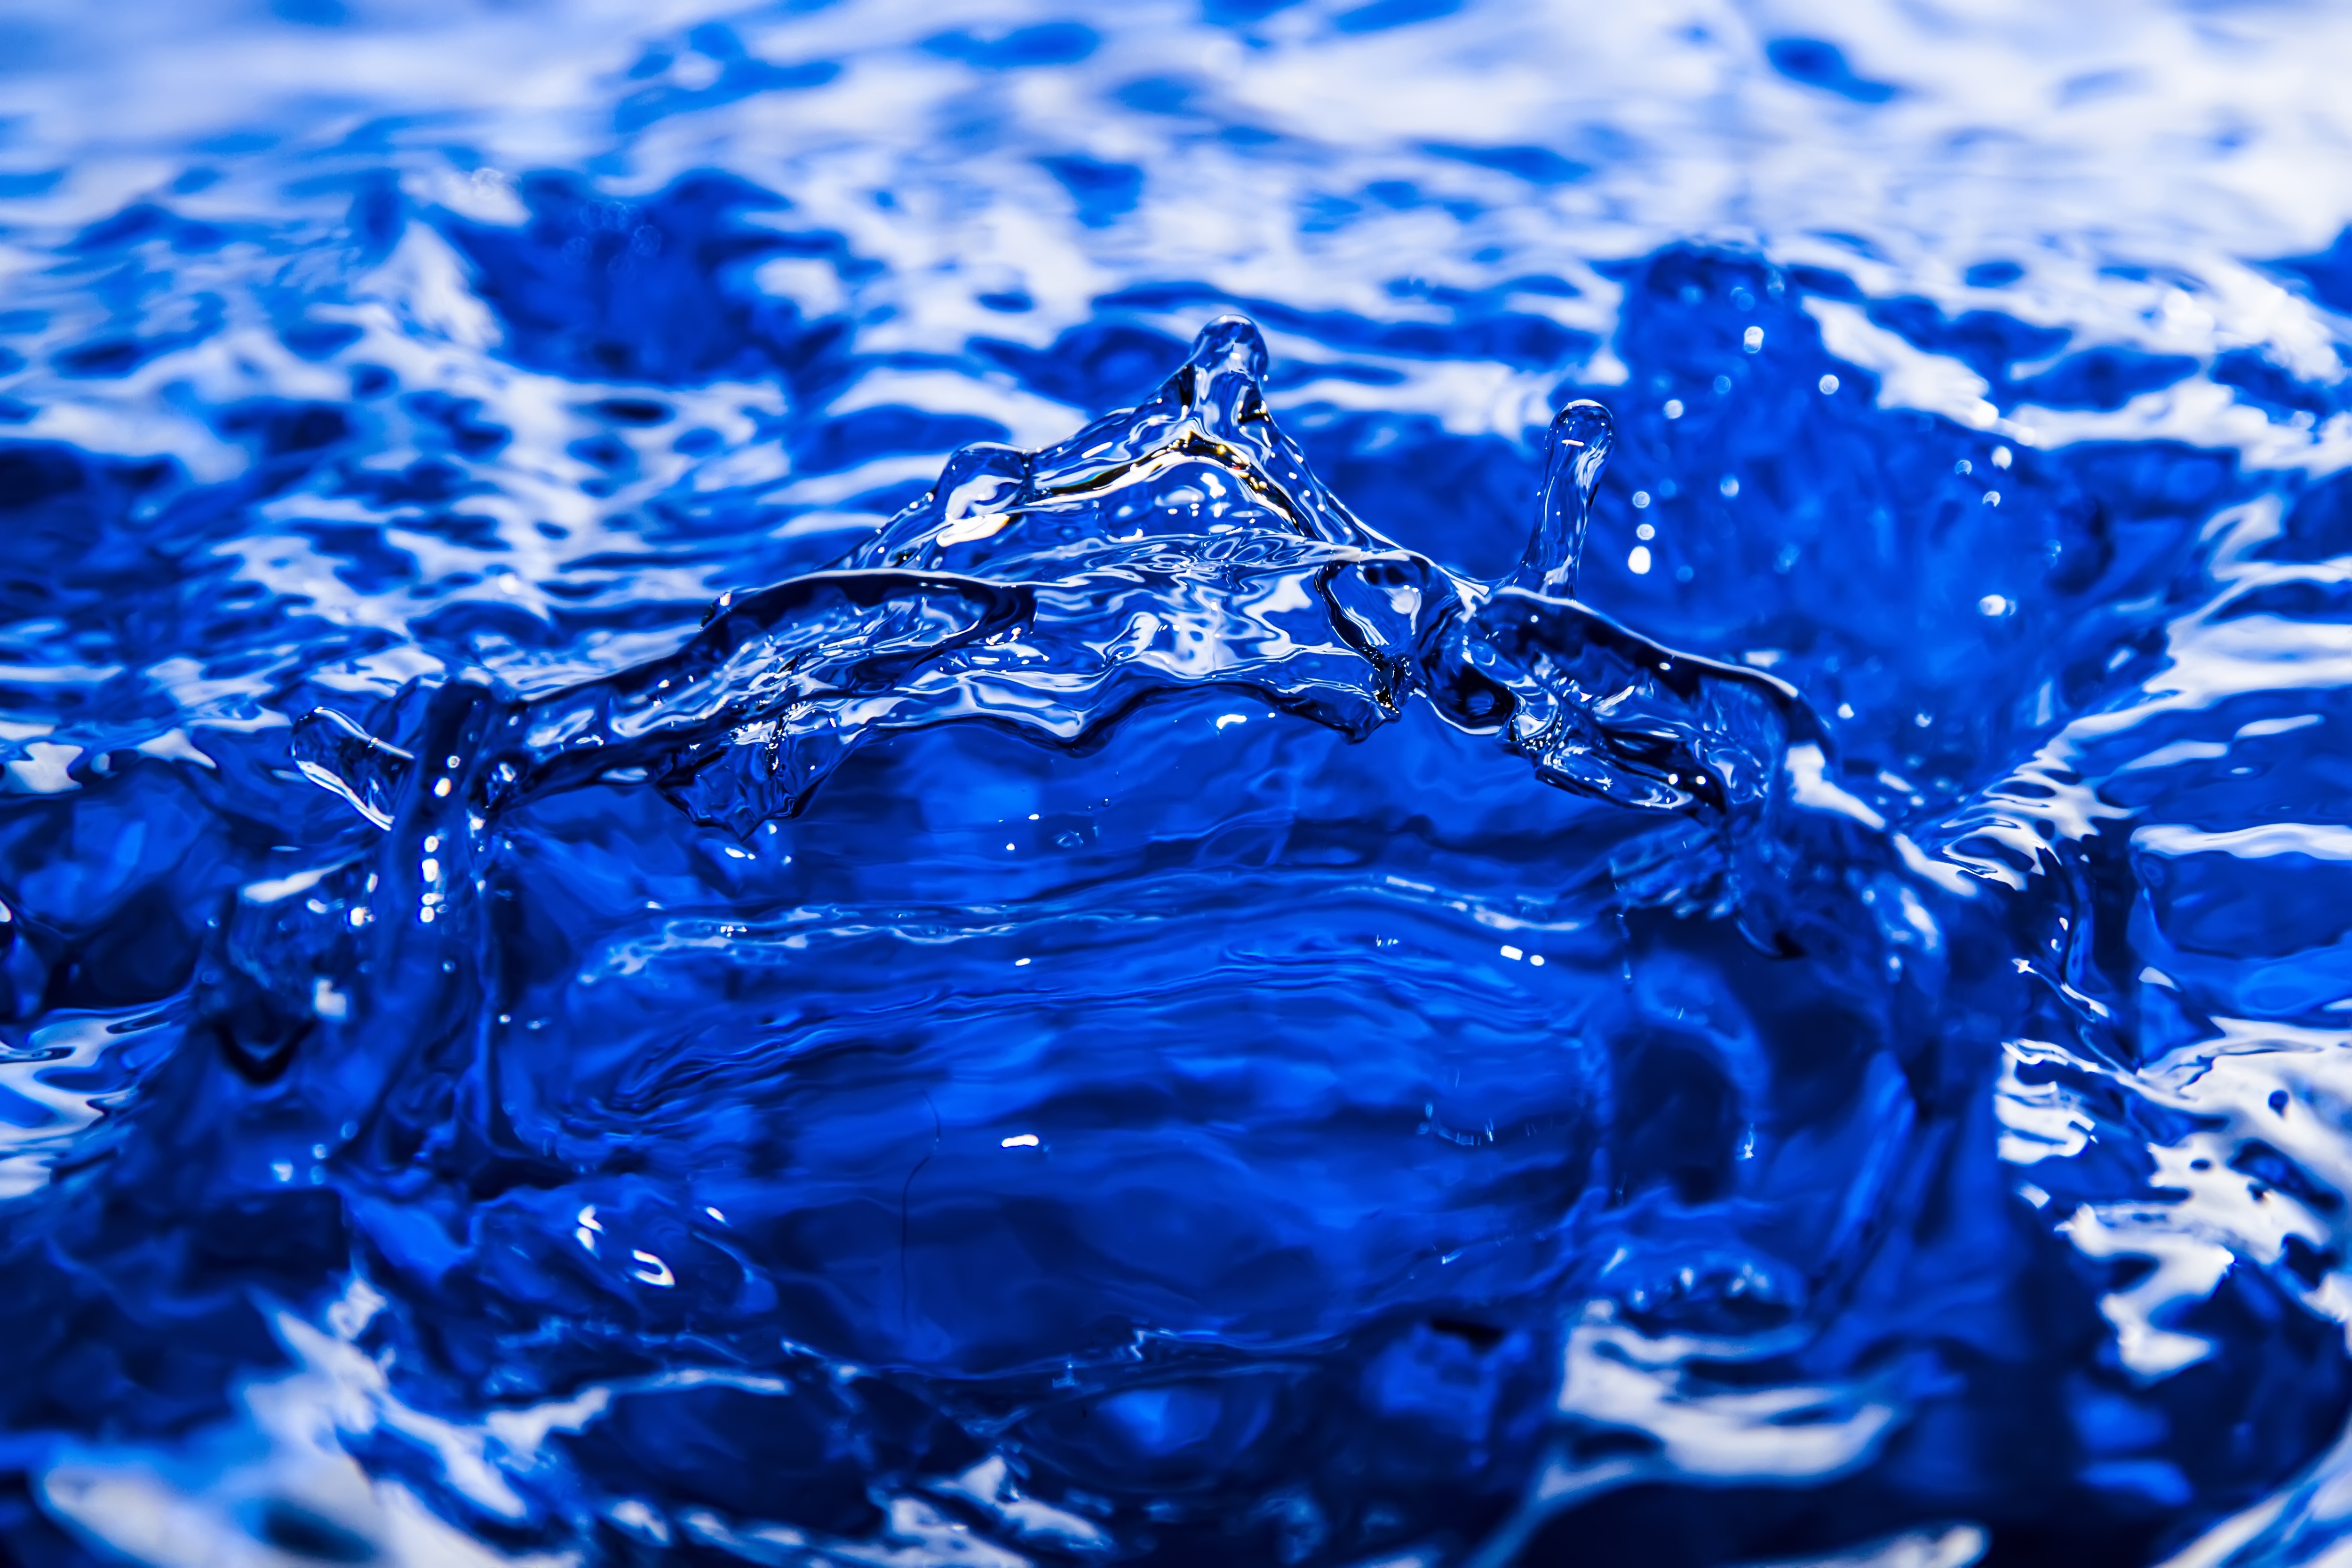 A splash of blue water